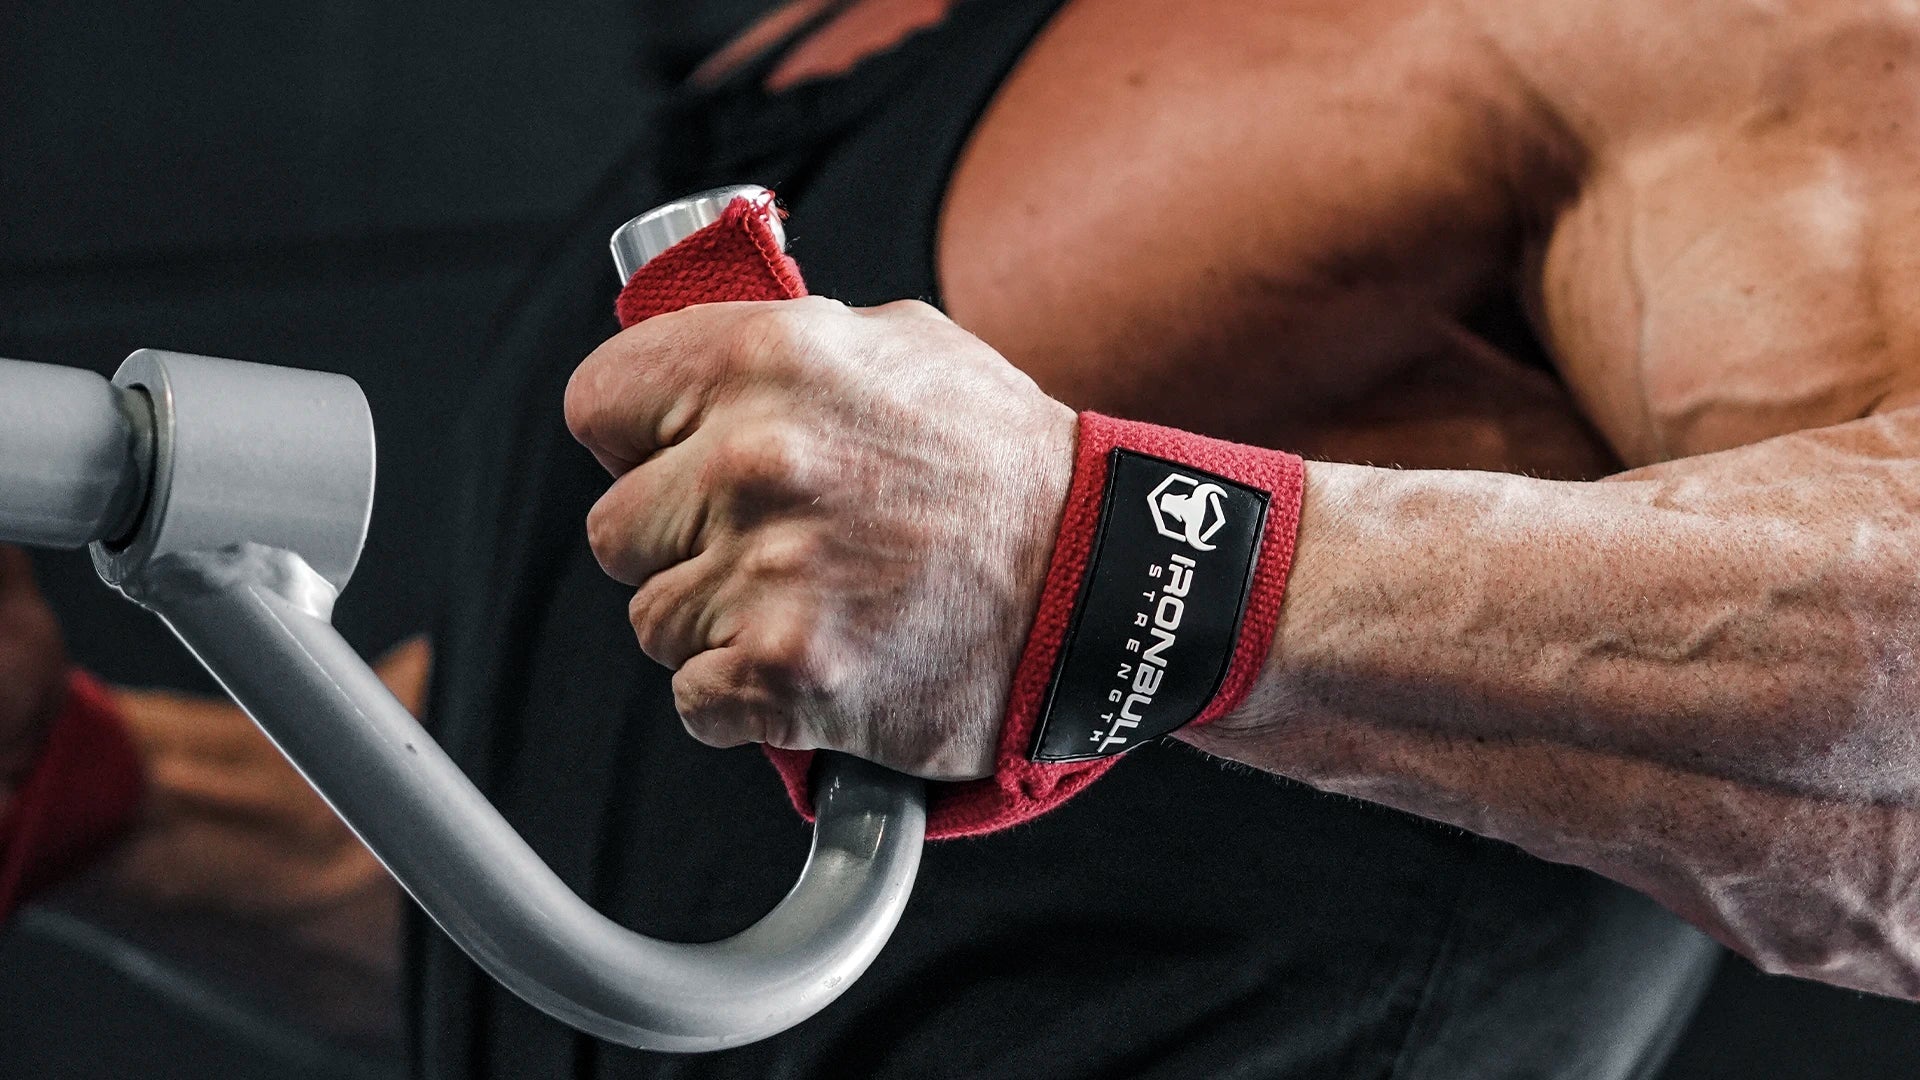 Weightlifting Wrist Straps: Why Wear them?